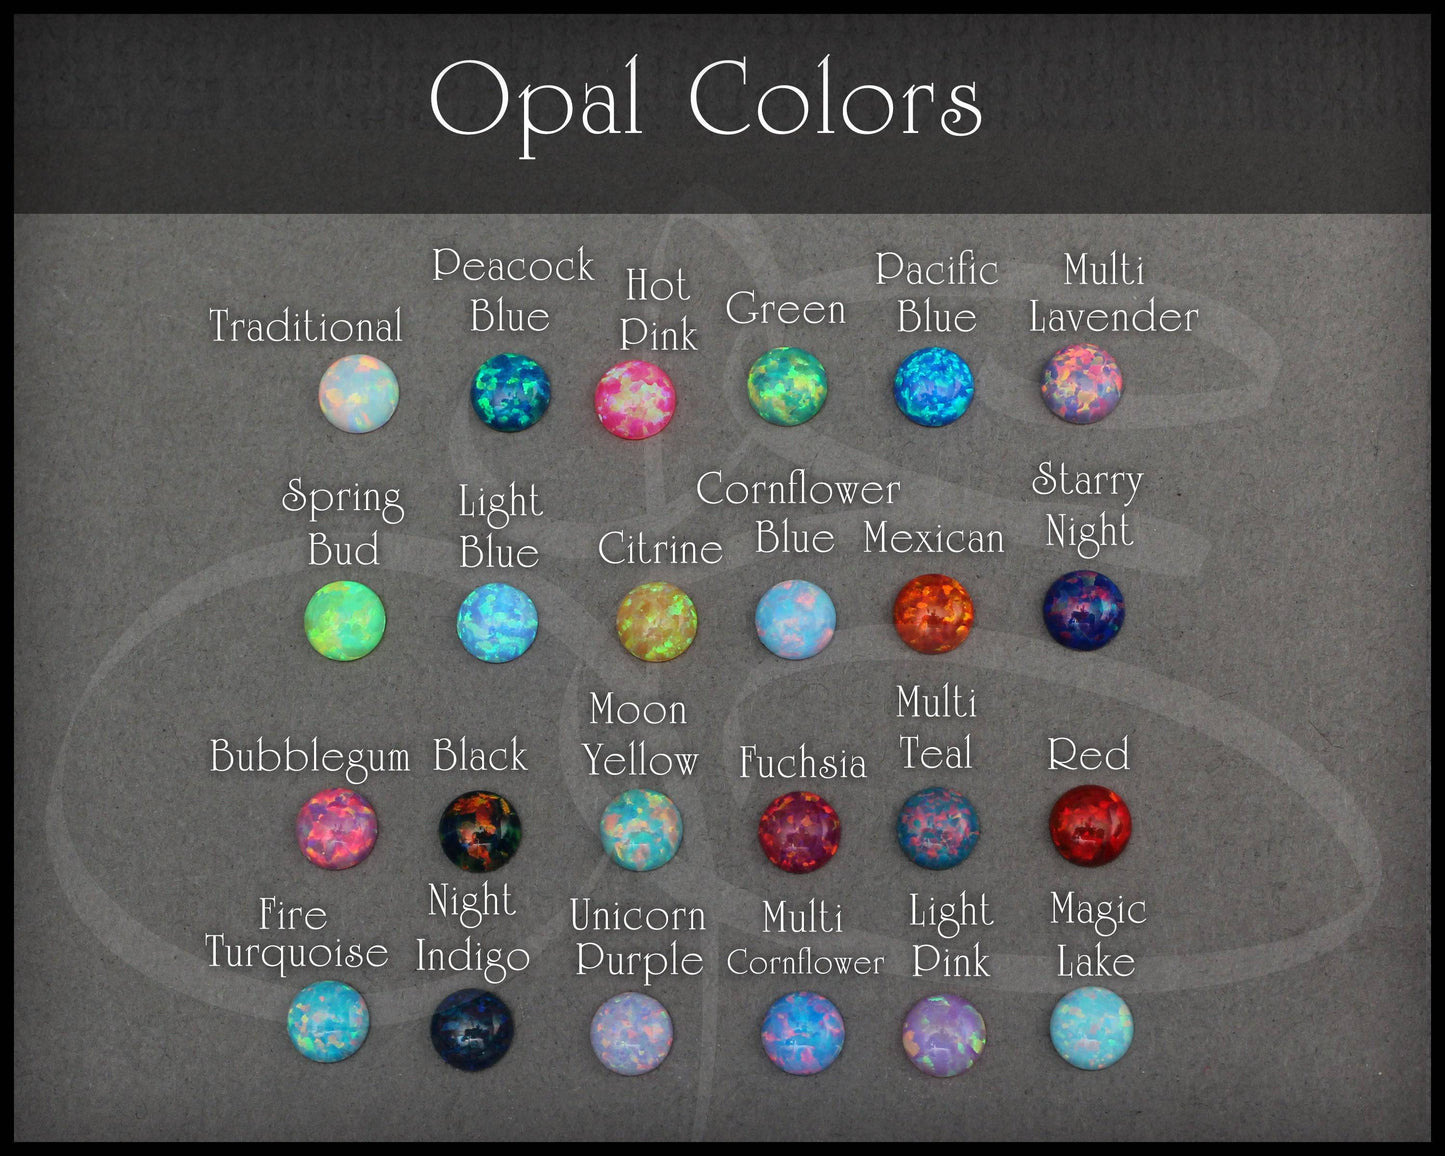 Load image into Gallery viewer, Flower Earrings ( choose opal or birthstone) - LE Jewelry Designs
